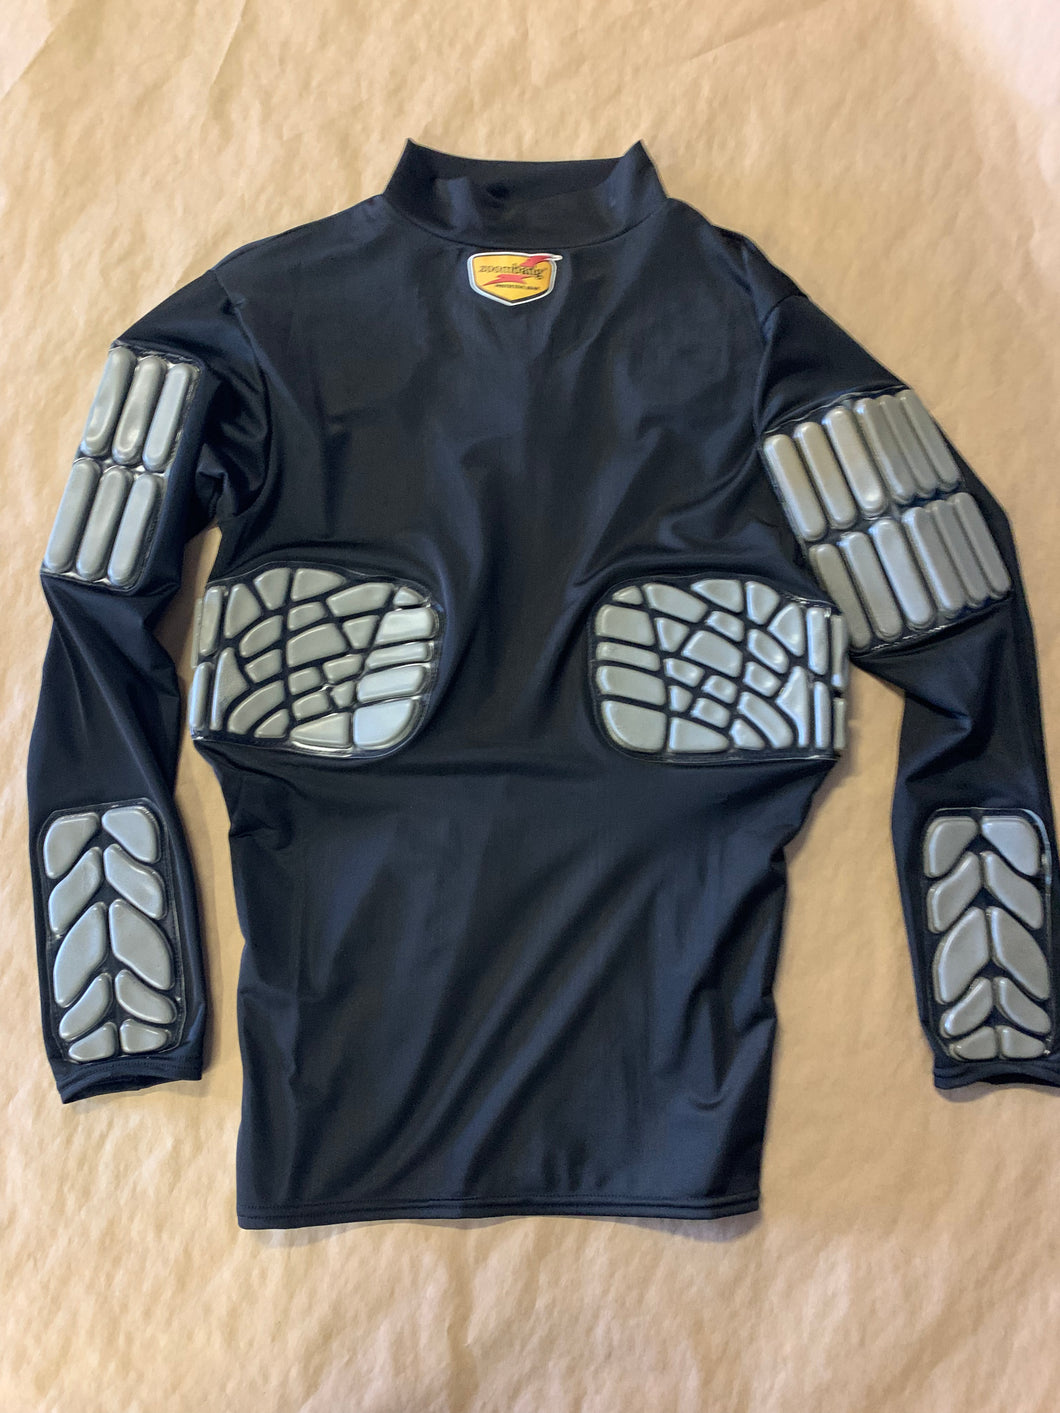 ZOOMBANG - Lacrosse player protective shirt - ADULT MEDIUM